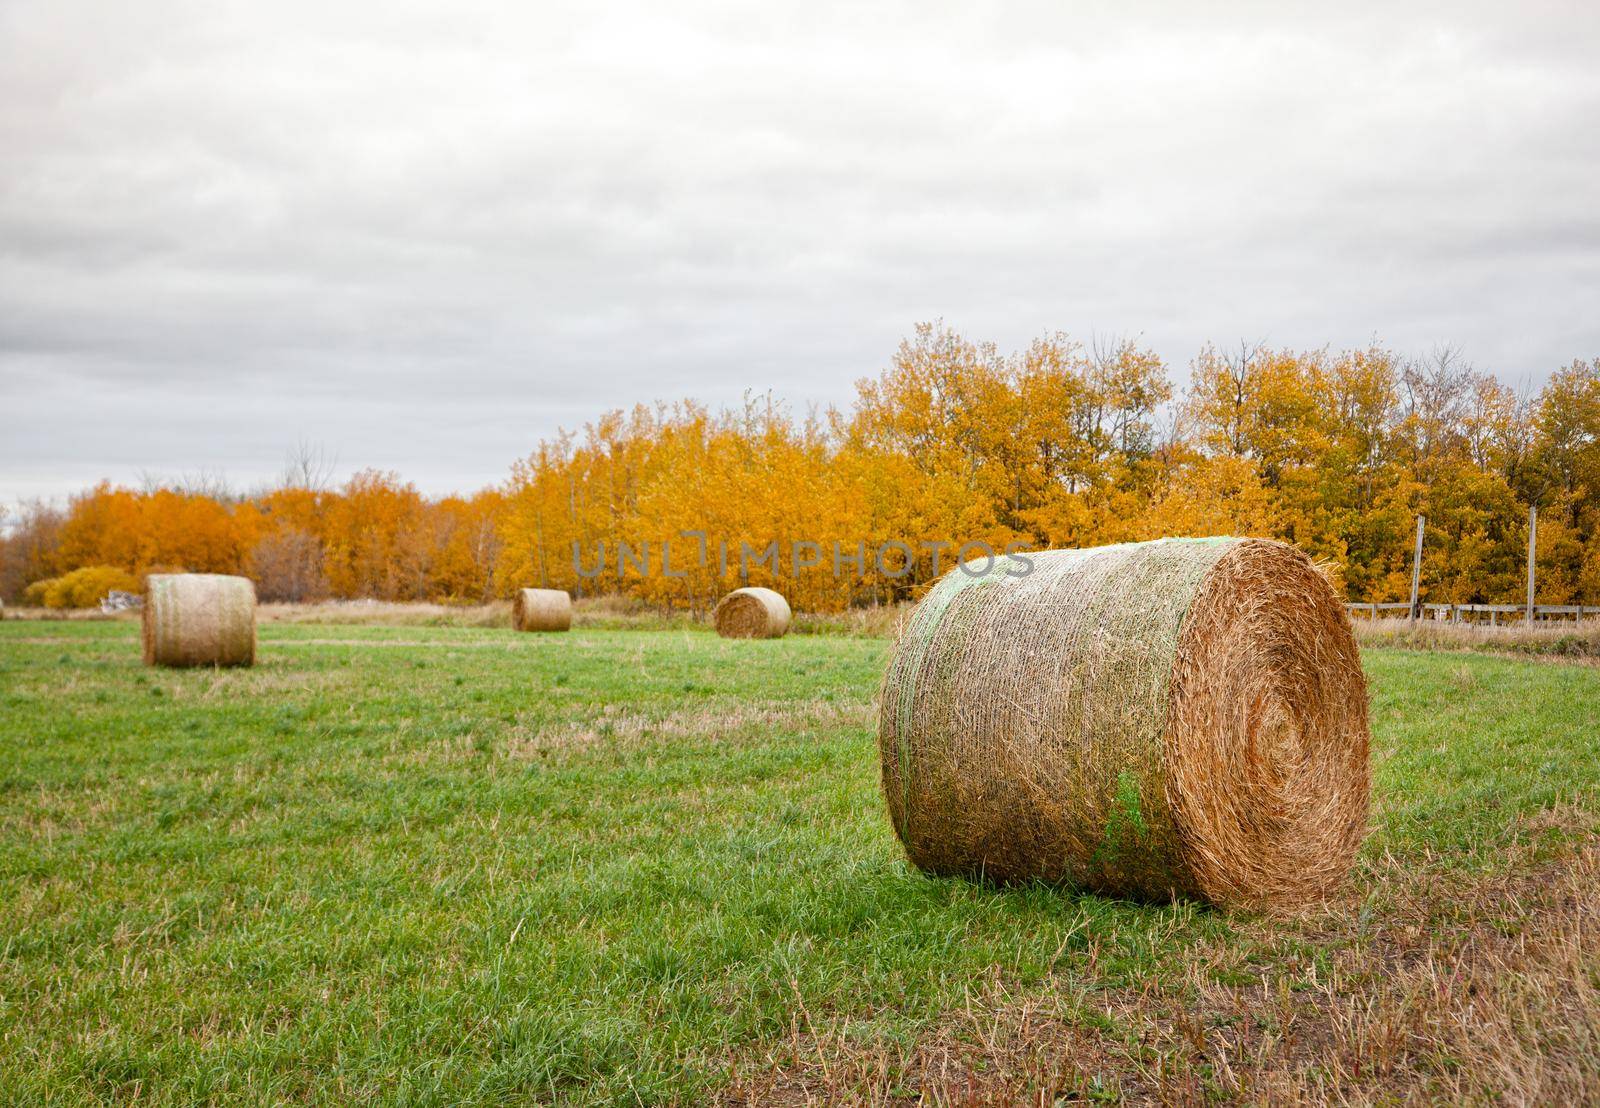 bales of hay in autumn prairie field  by rustycanuck